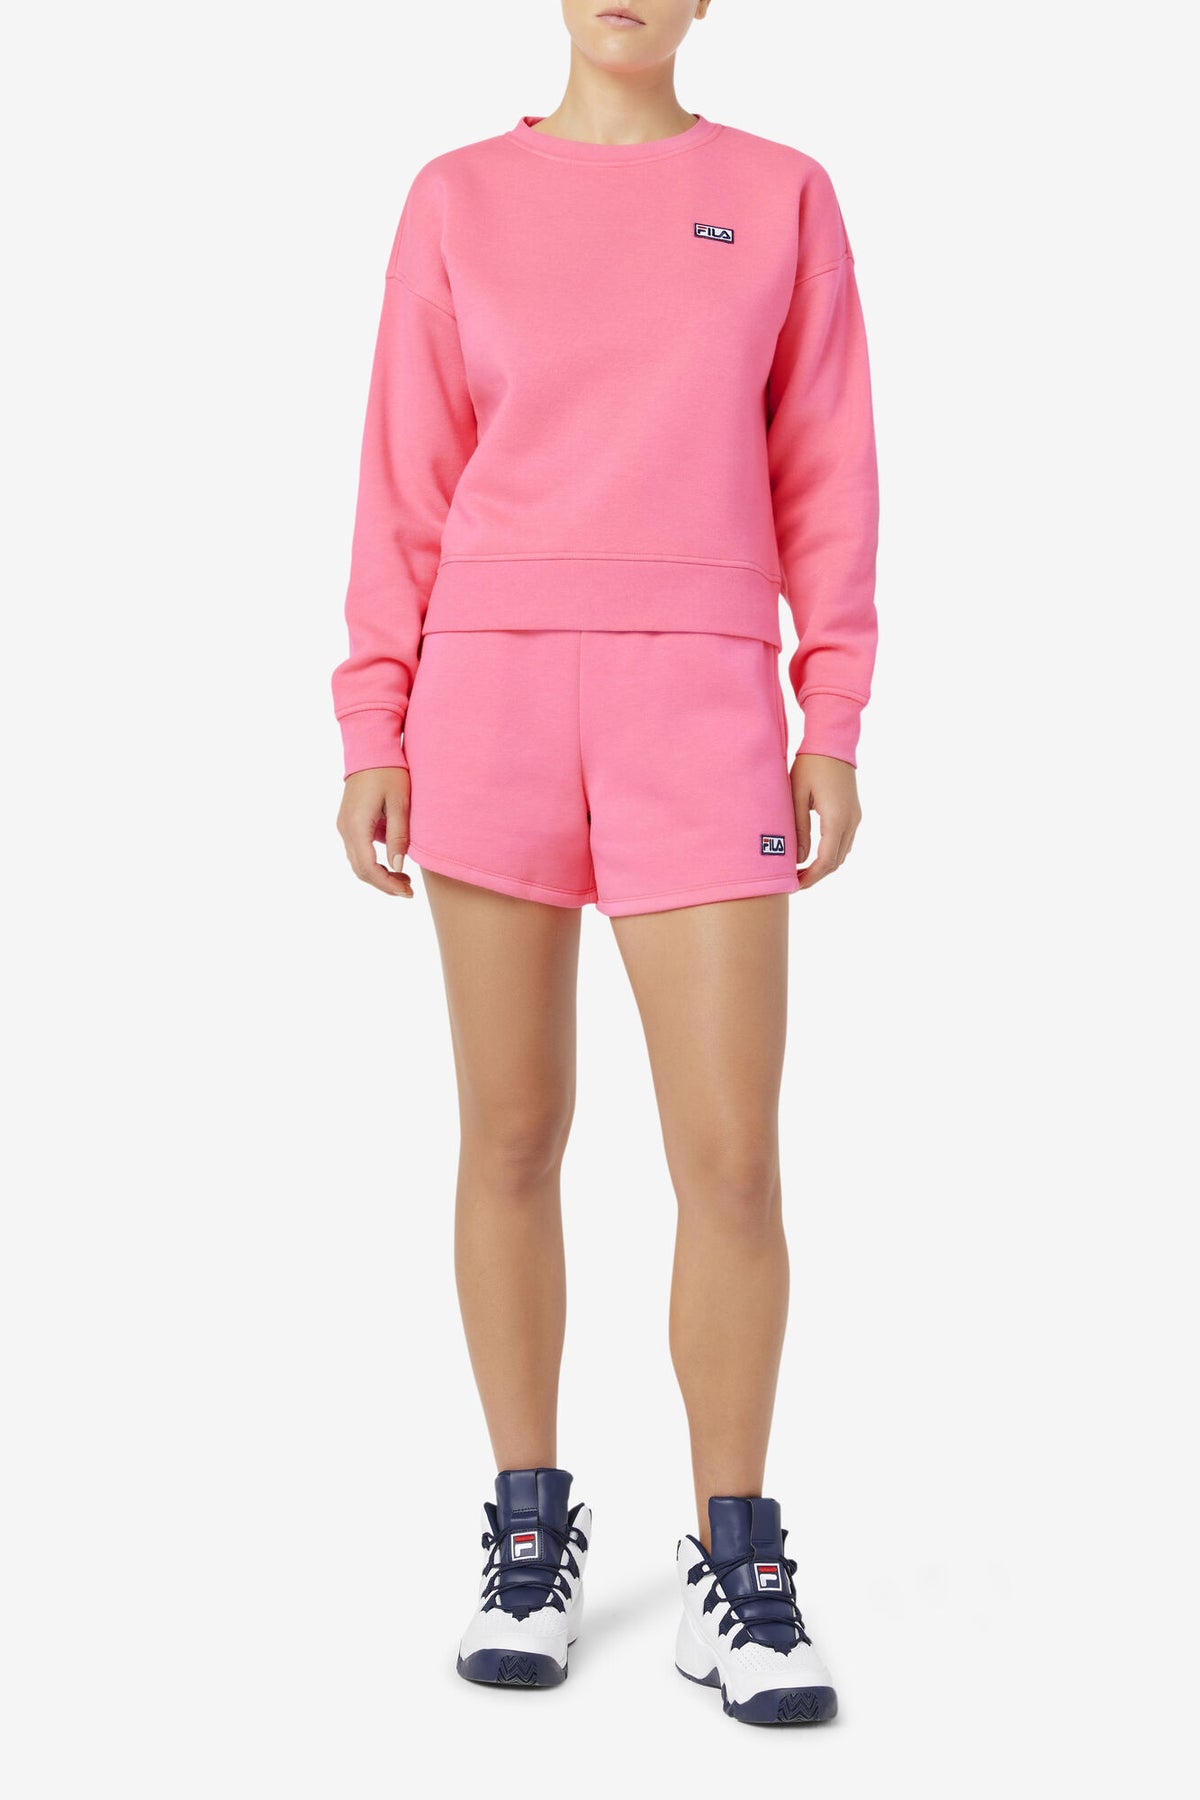 Fila Diara Sweatpant Shorts  - Knockout Pink